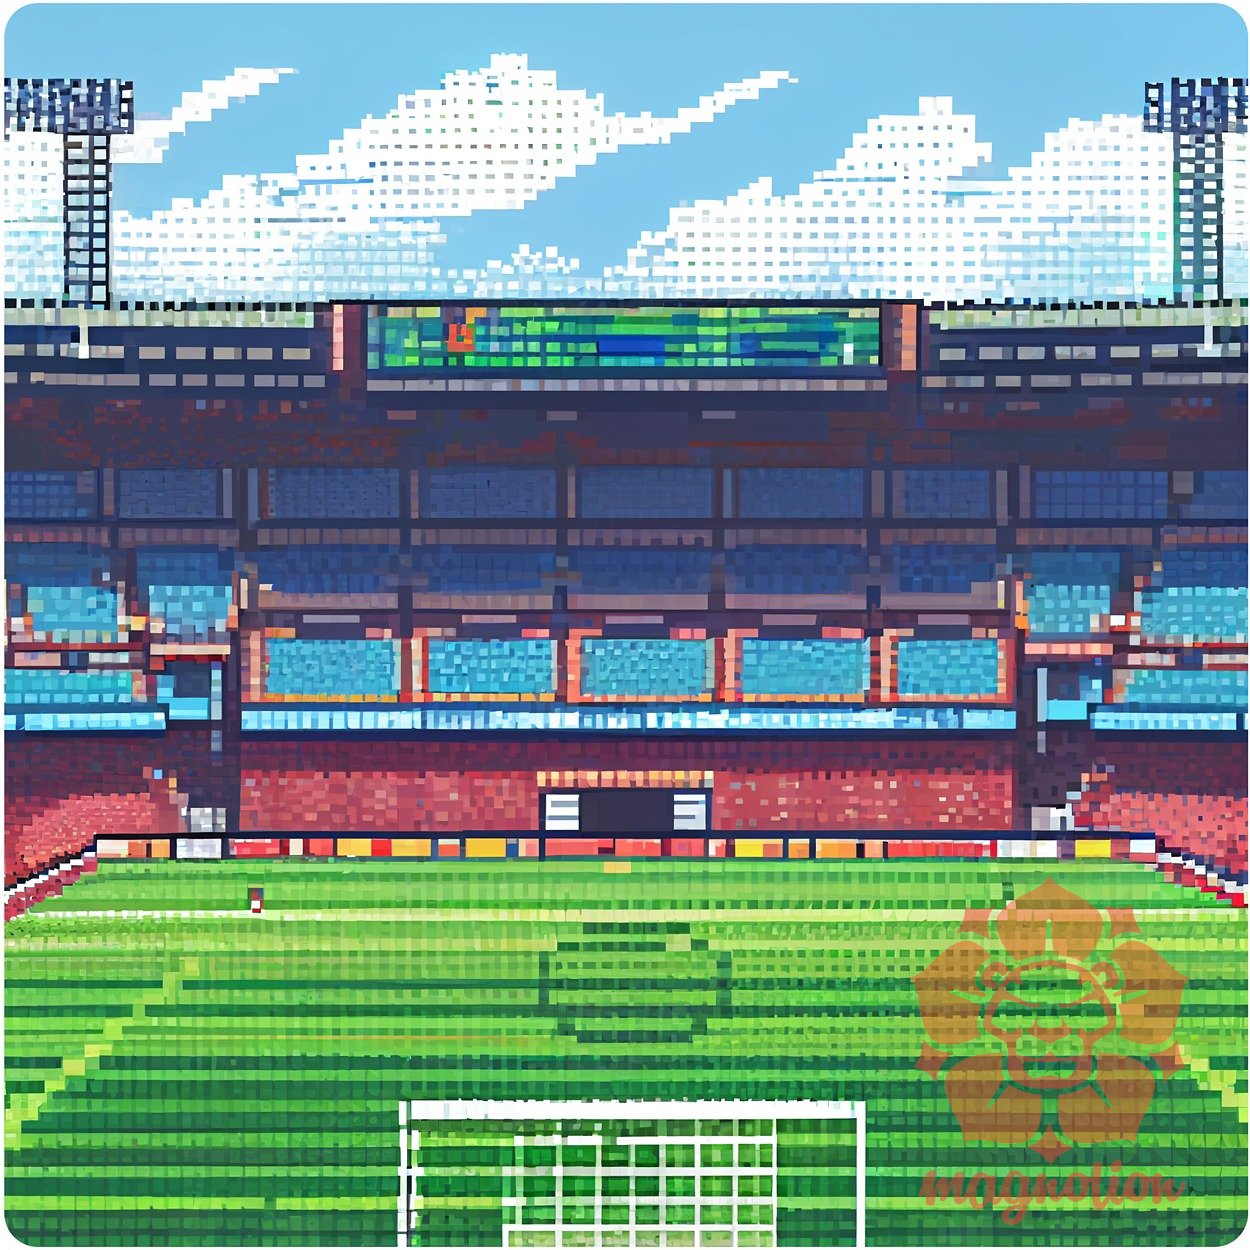 Foci stadion pixelart